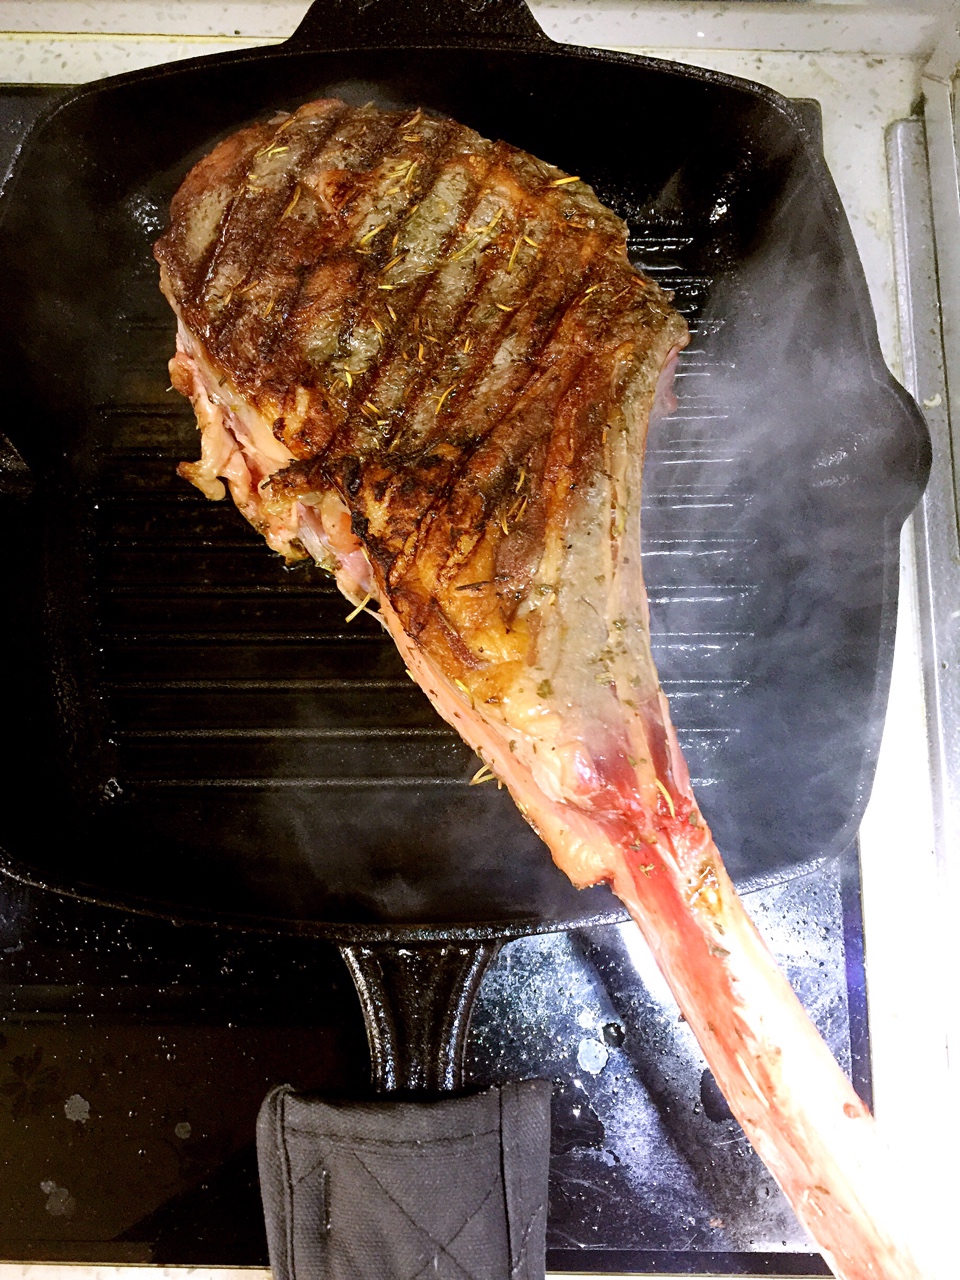 Costco煮易 | 香烤战斧式牛排 - Tomahawk Steak